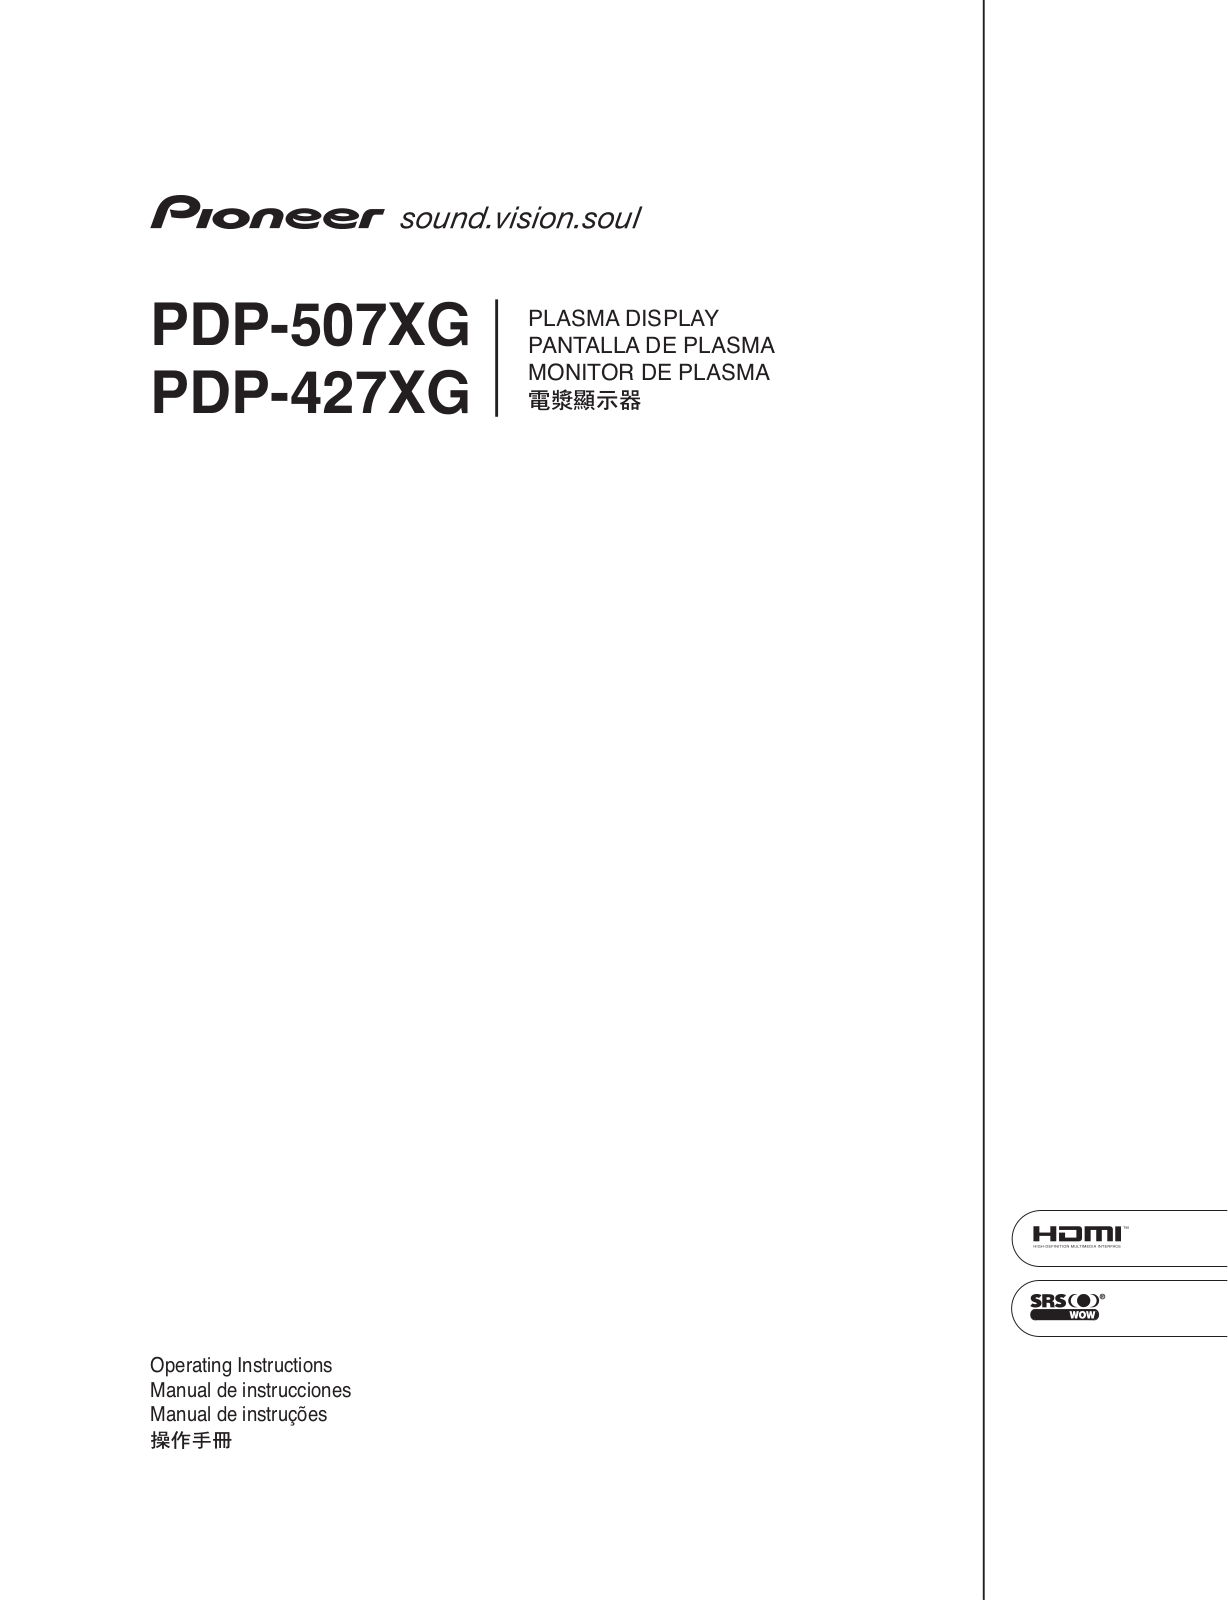 Pioneer PDP-427XG, PDP-507XG User Manual